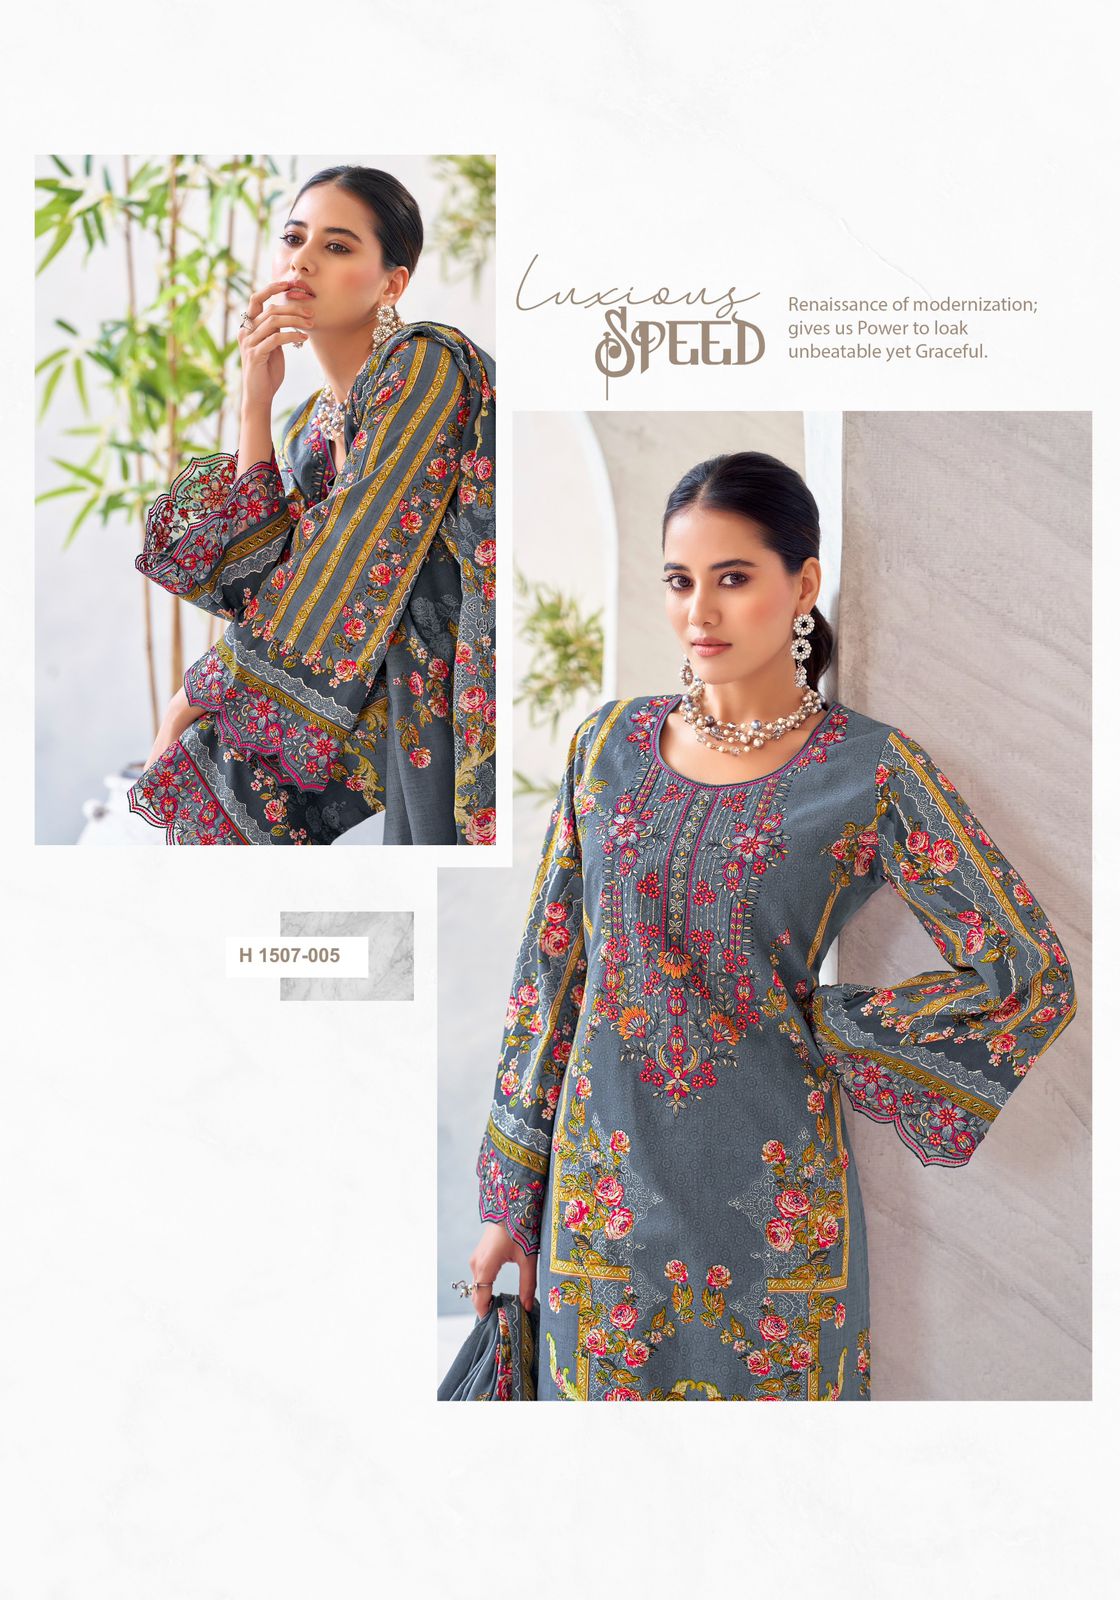 Alok Suits Qurbat Vol 15 Cambric Cotton Pakistani Dress Mateiral Wholesale Supplier In Surat